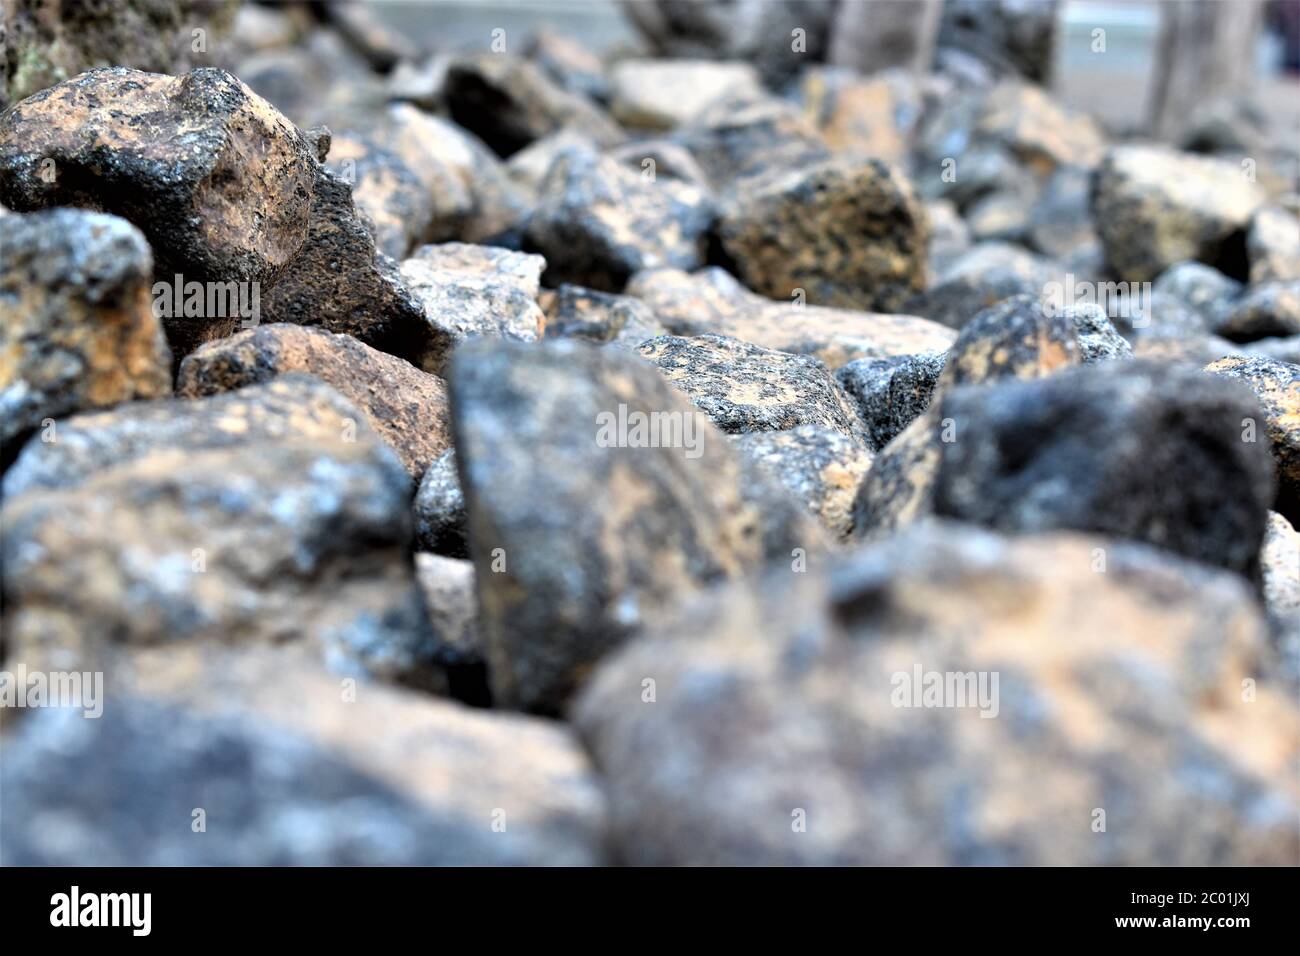 Primer plano de rocas grises azuladas pavimentando el hombro de una carretera Foto de stock